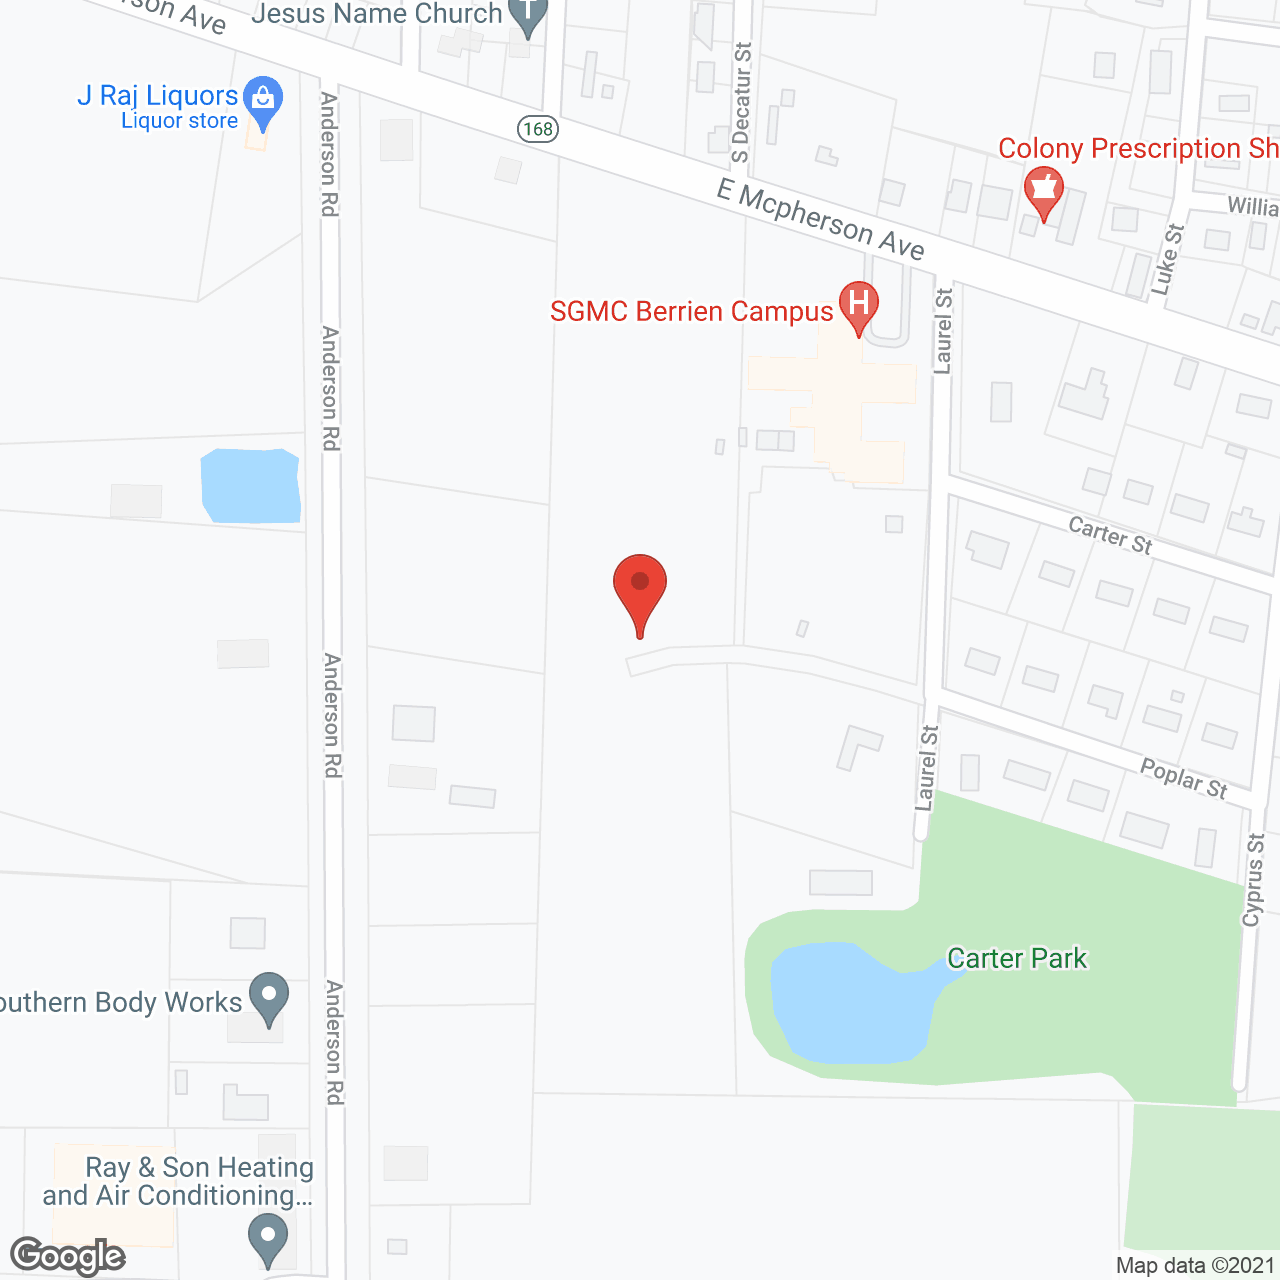 Fellowship Home of Nashville in google map